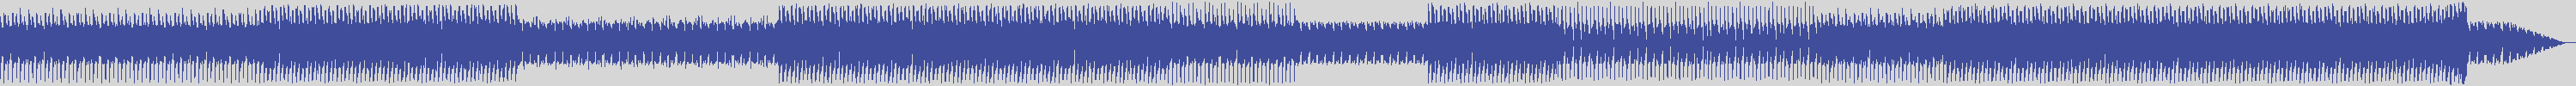 nf_boyz_records [NFY056] Dj Amnesia - Arnesse Luke [Original Mix] audio wave form